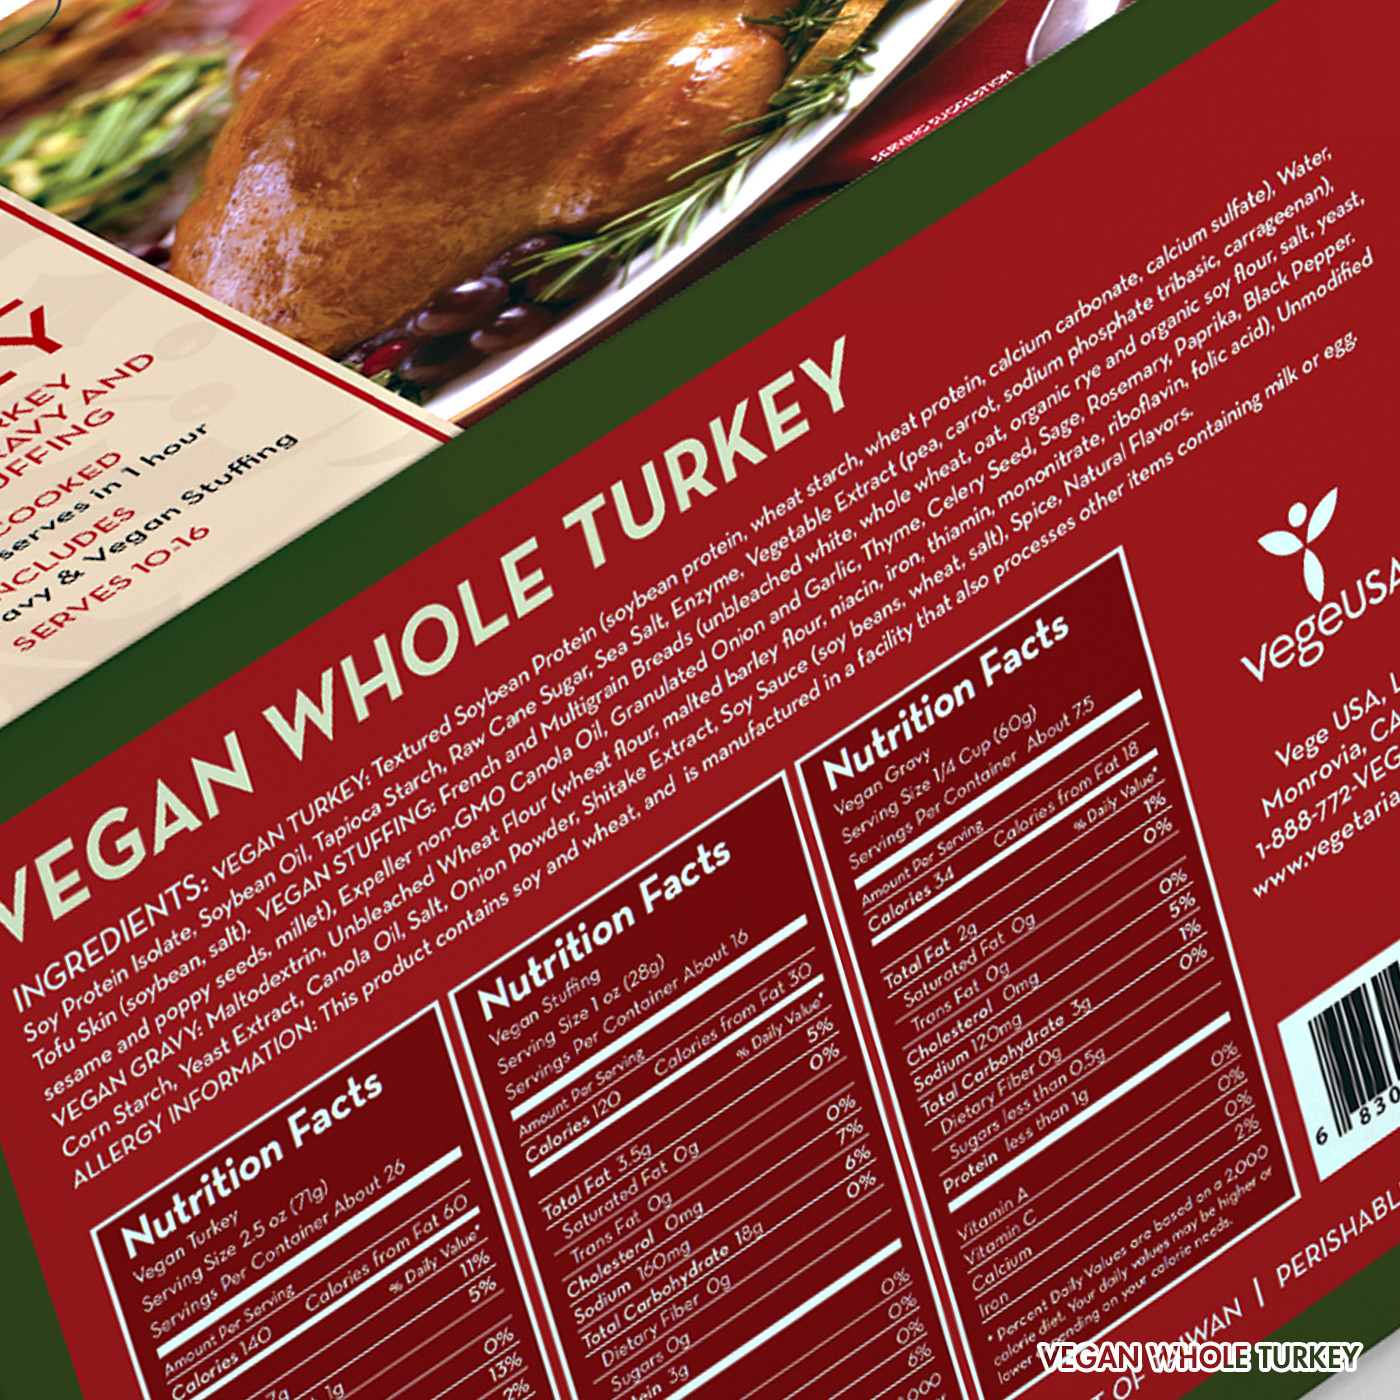 Vegan Whole Turkey
 Buy Vegan Whole Turkey by Ve arian Plus MyrtleGreens